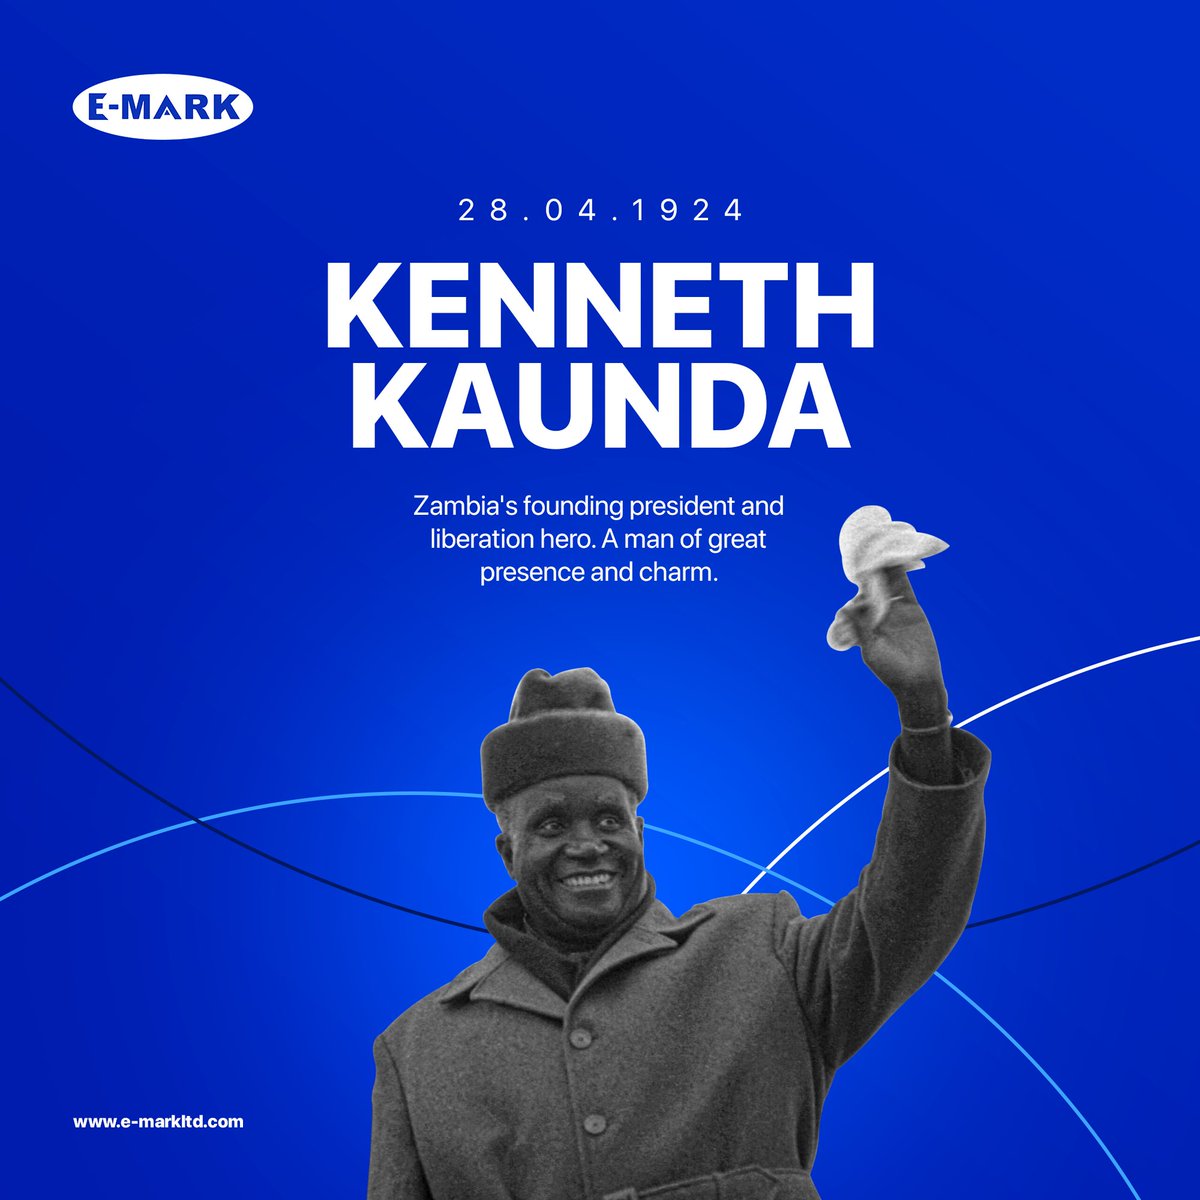 Happy National Kenneth Kaunda day!

#KennethKaunda
#FoundingFather
#ConnectingPeople